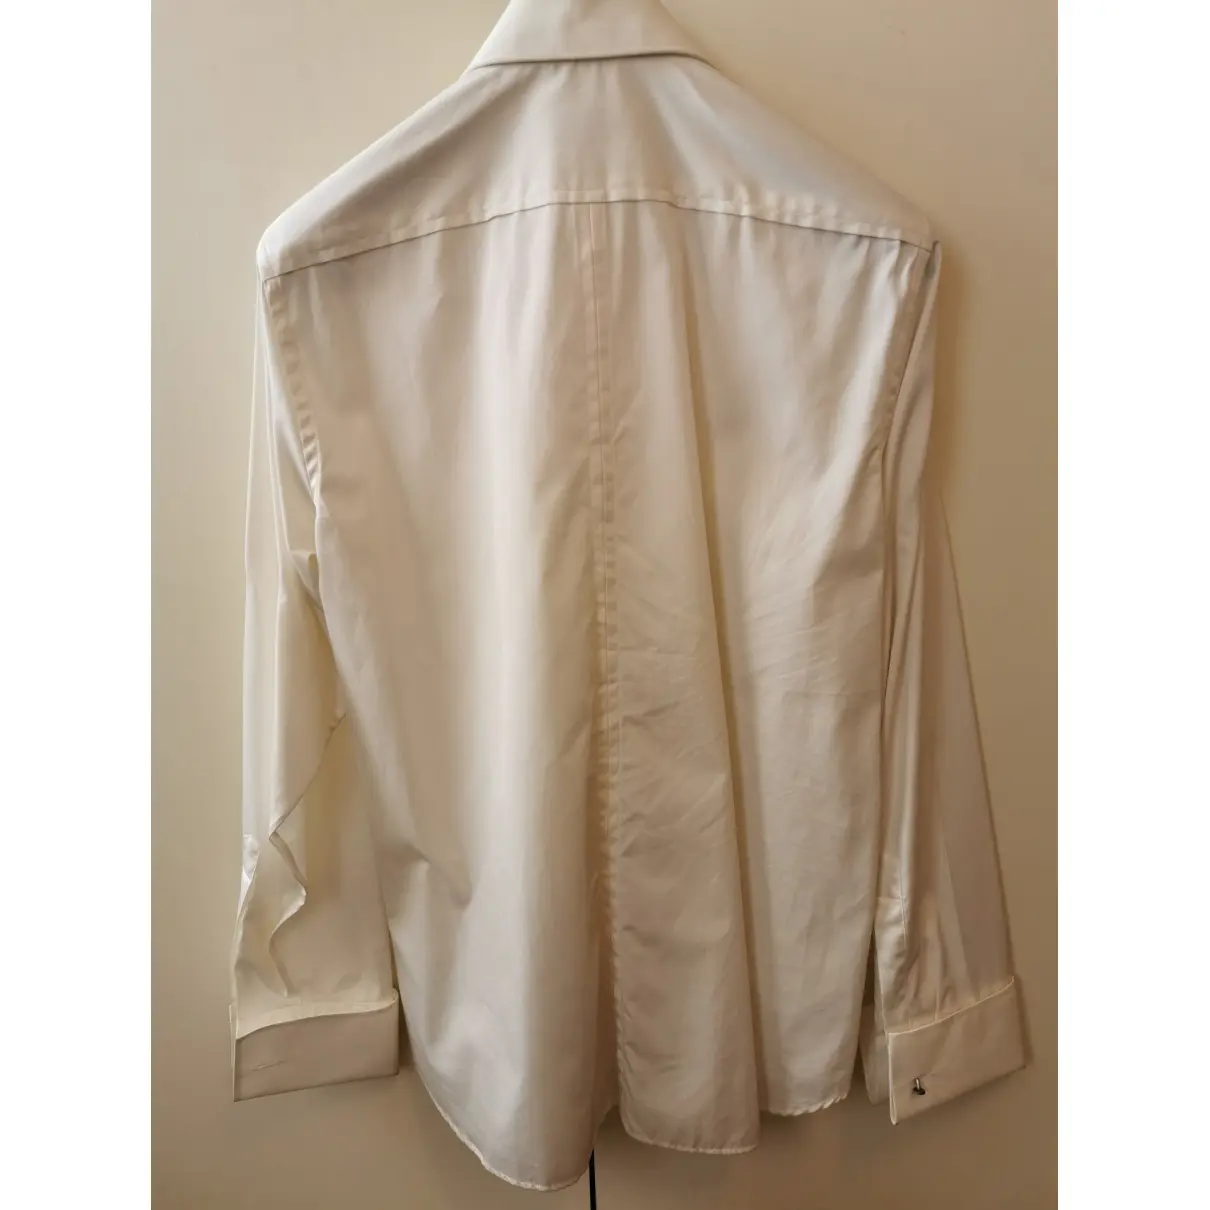 Kenzo Shirt for sale - Vintage